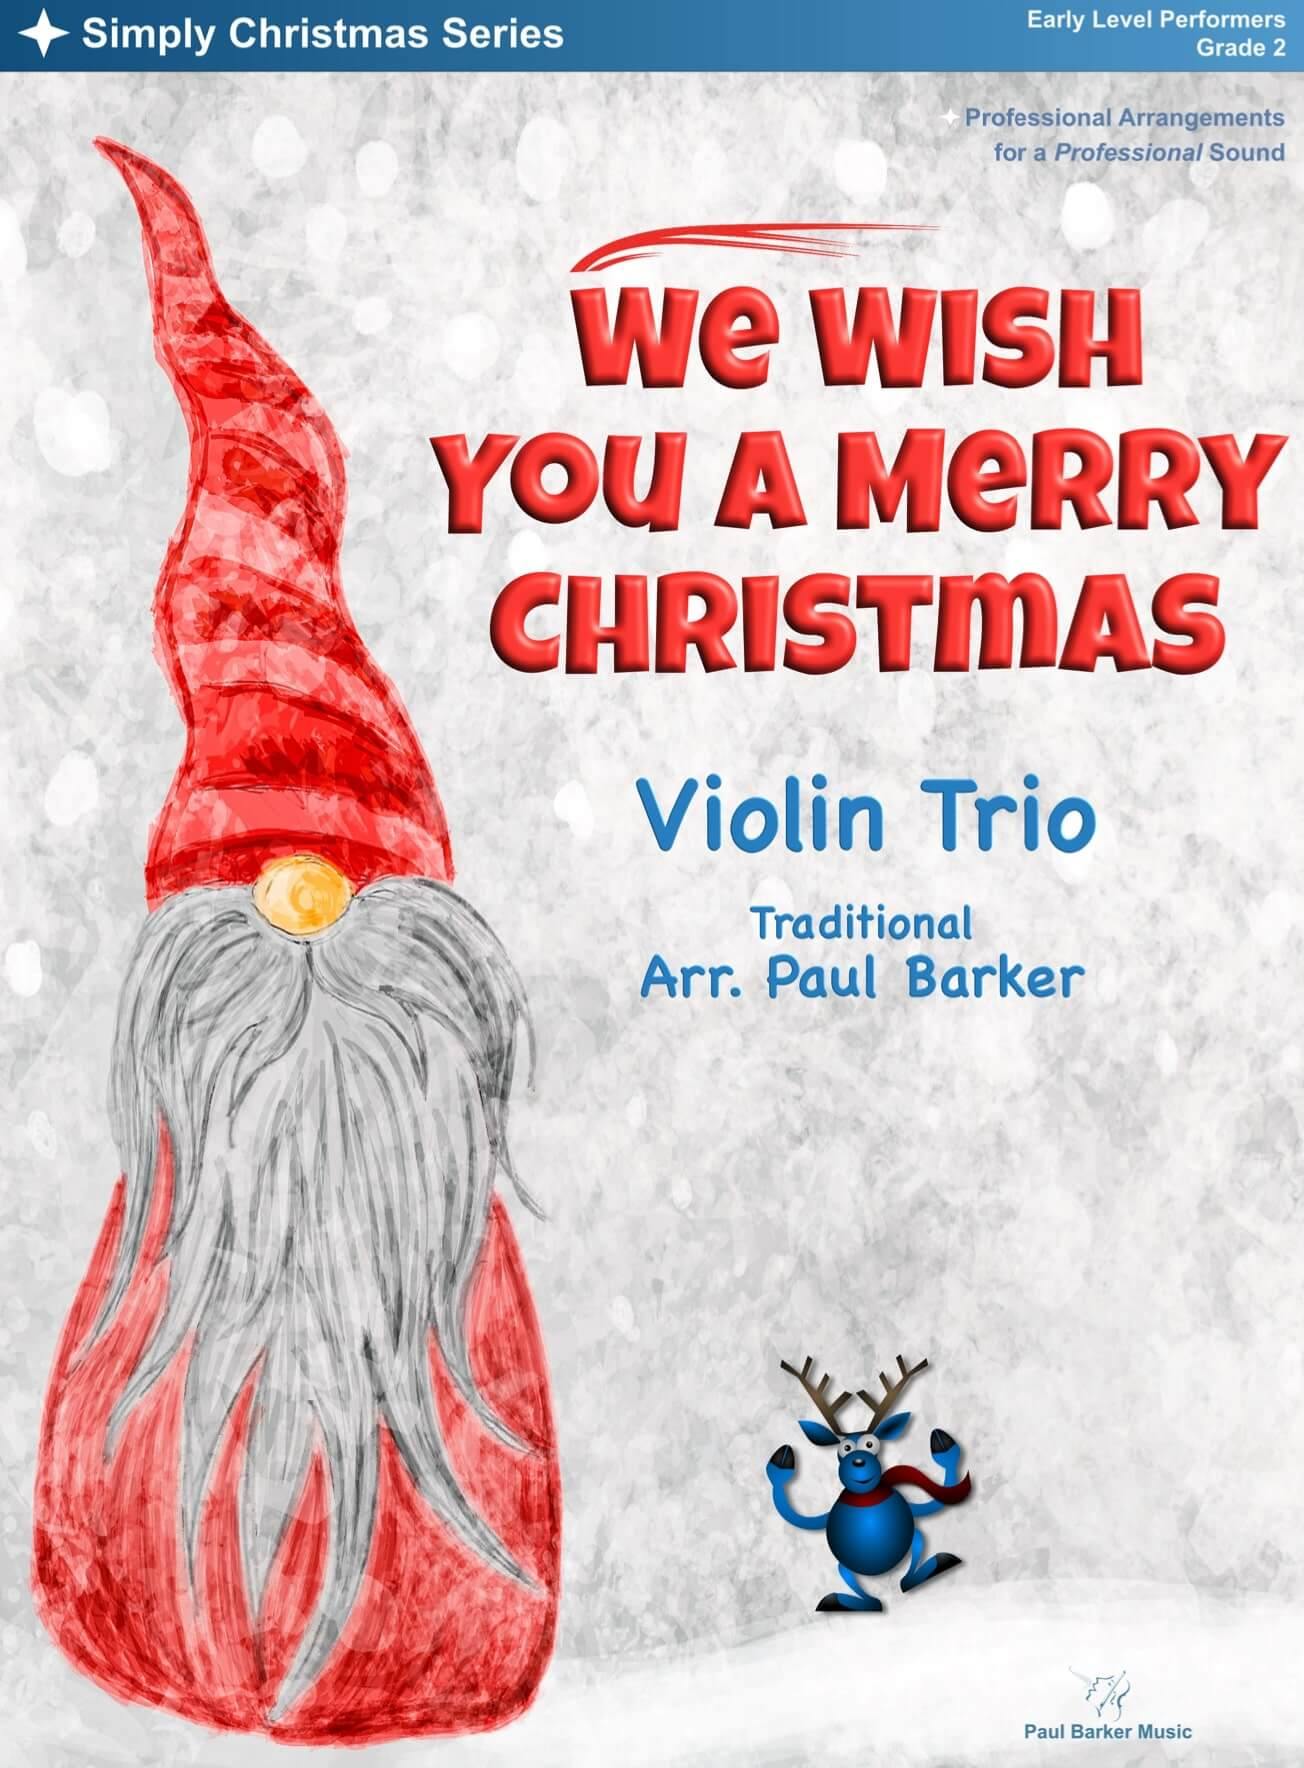 We Wish You A Merry Christmas (Violin Trio) - Paul Barker Music 